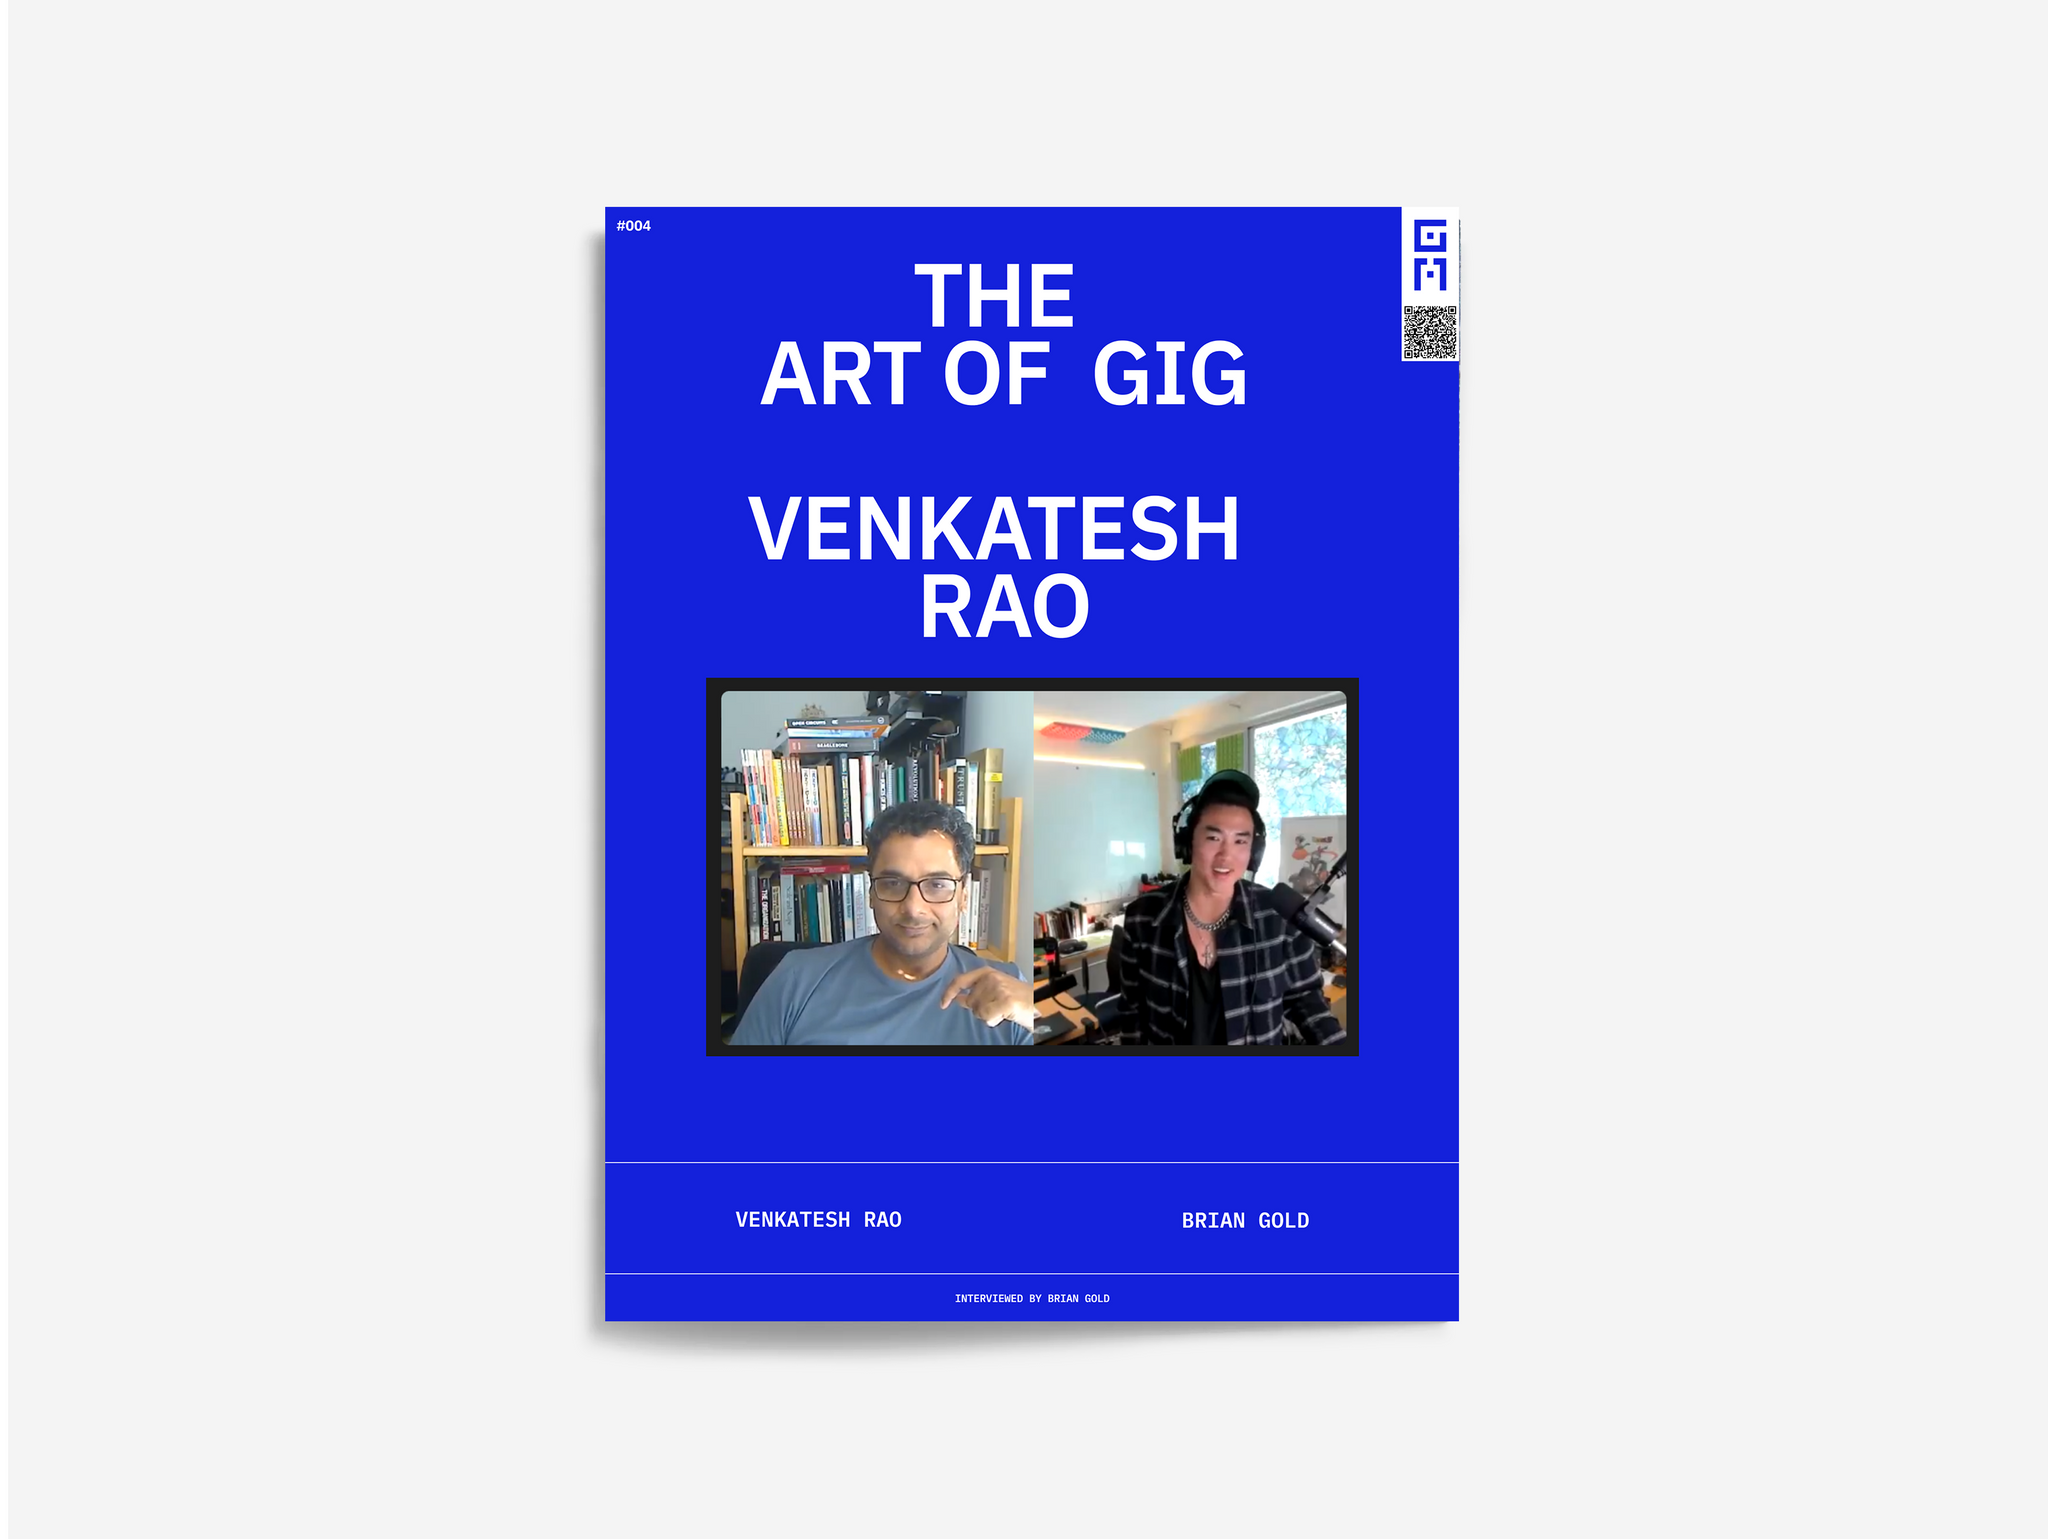 Episode 004: Venkatesh Rao, The Art of the Gig